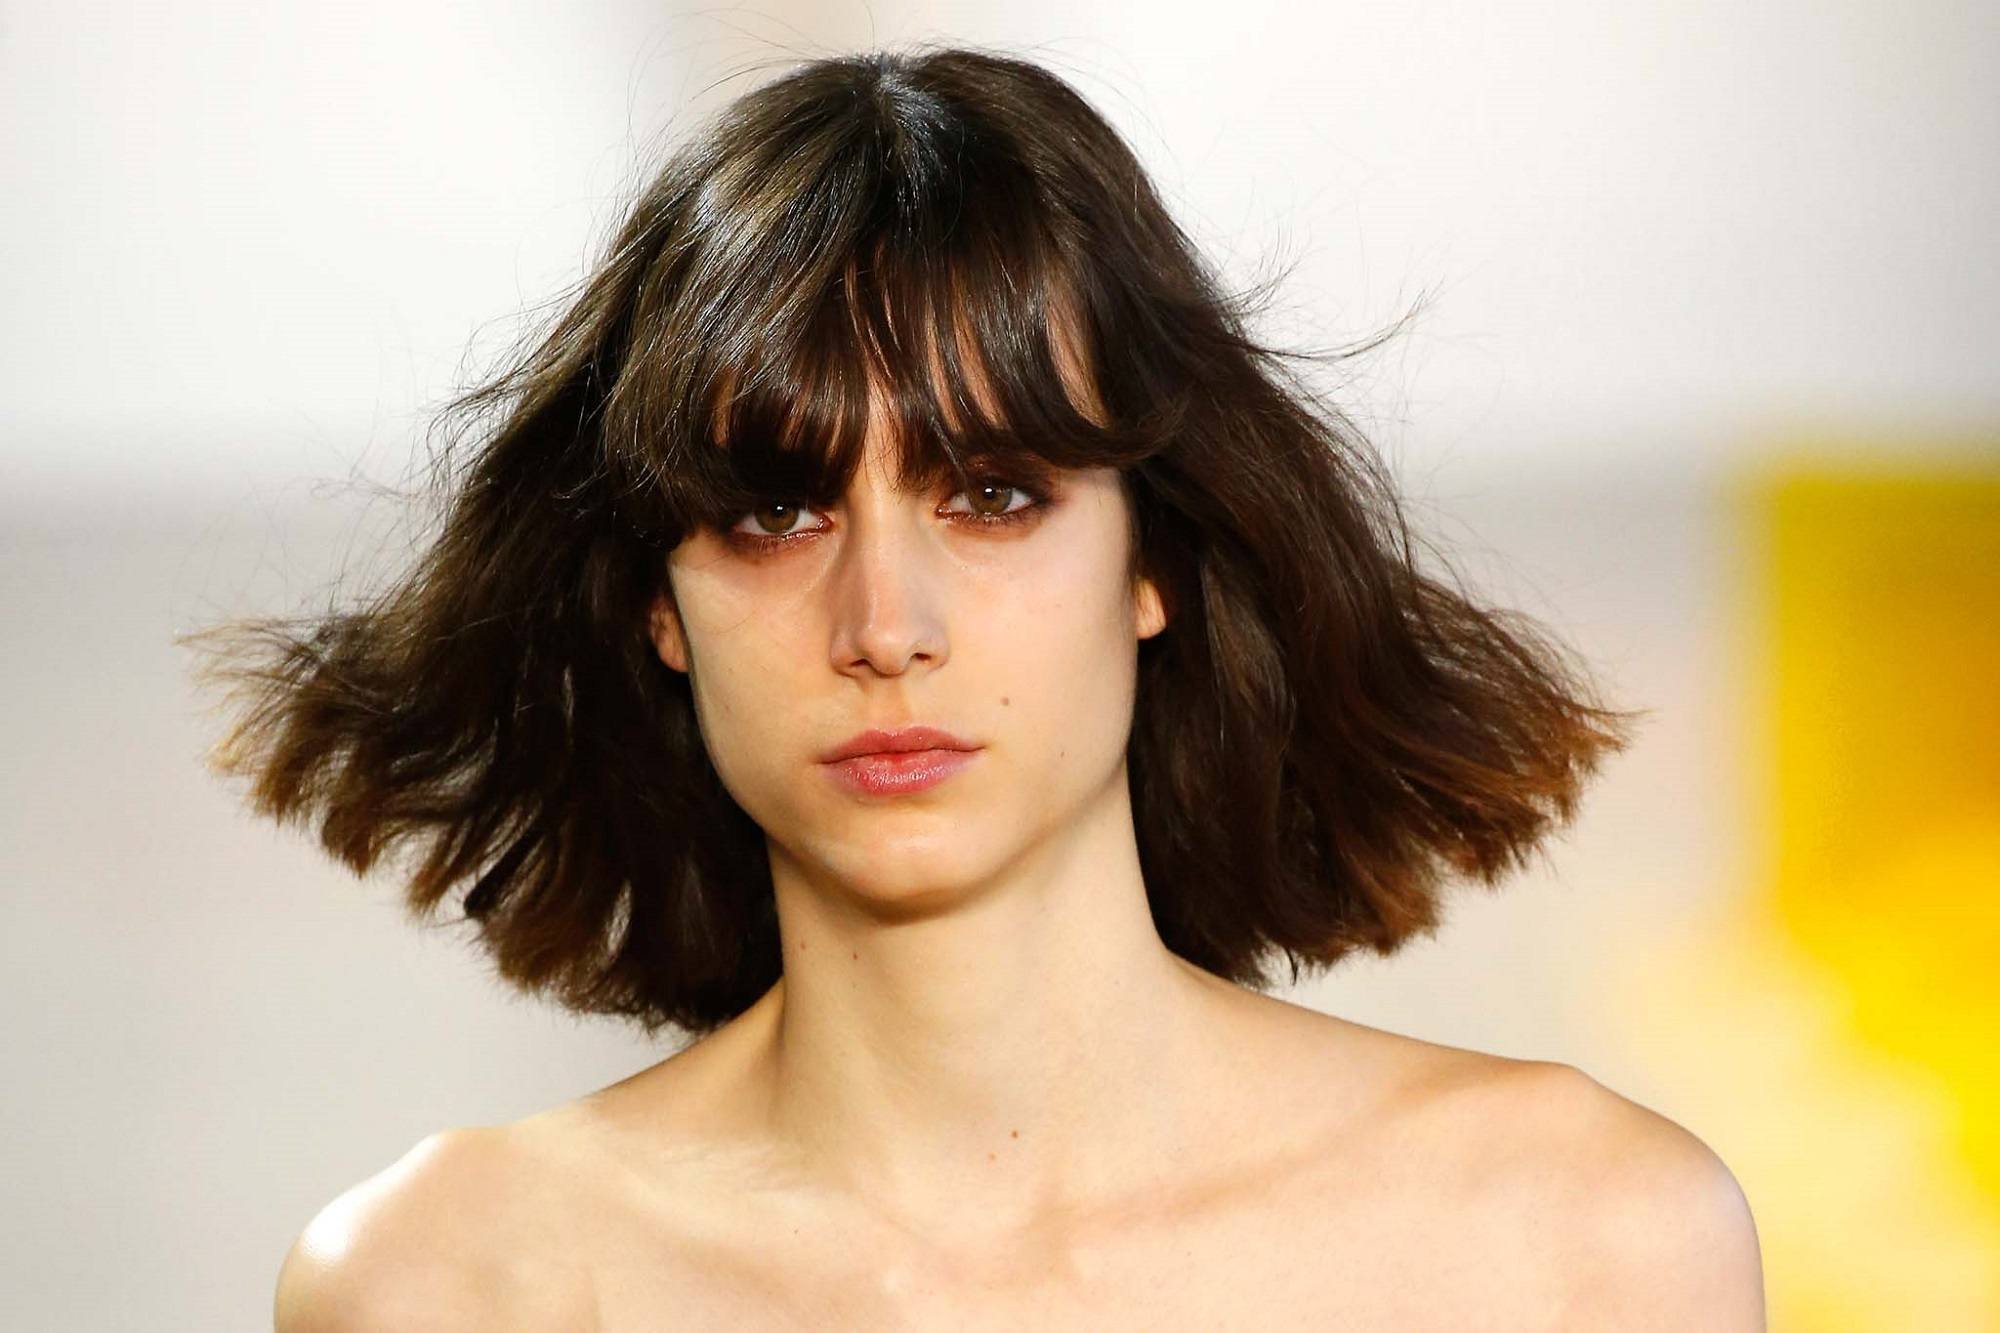 New York Fashion Week hair: Closeup shot of a woman with shoulder length dark hair with bangs